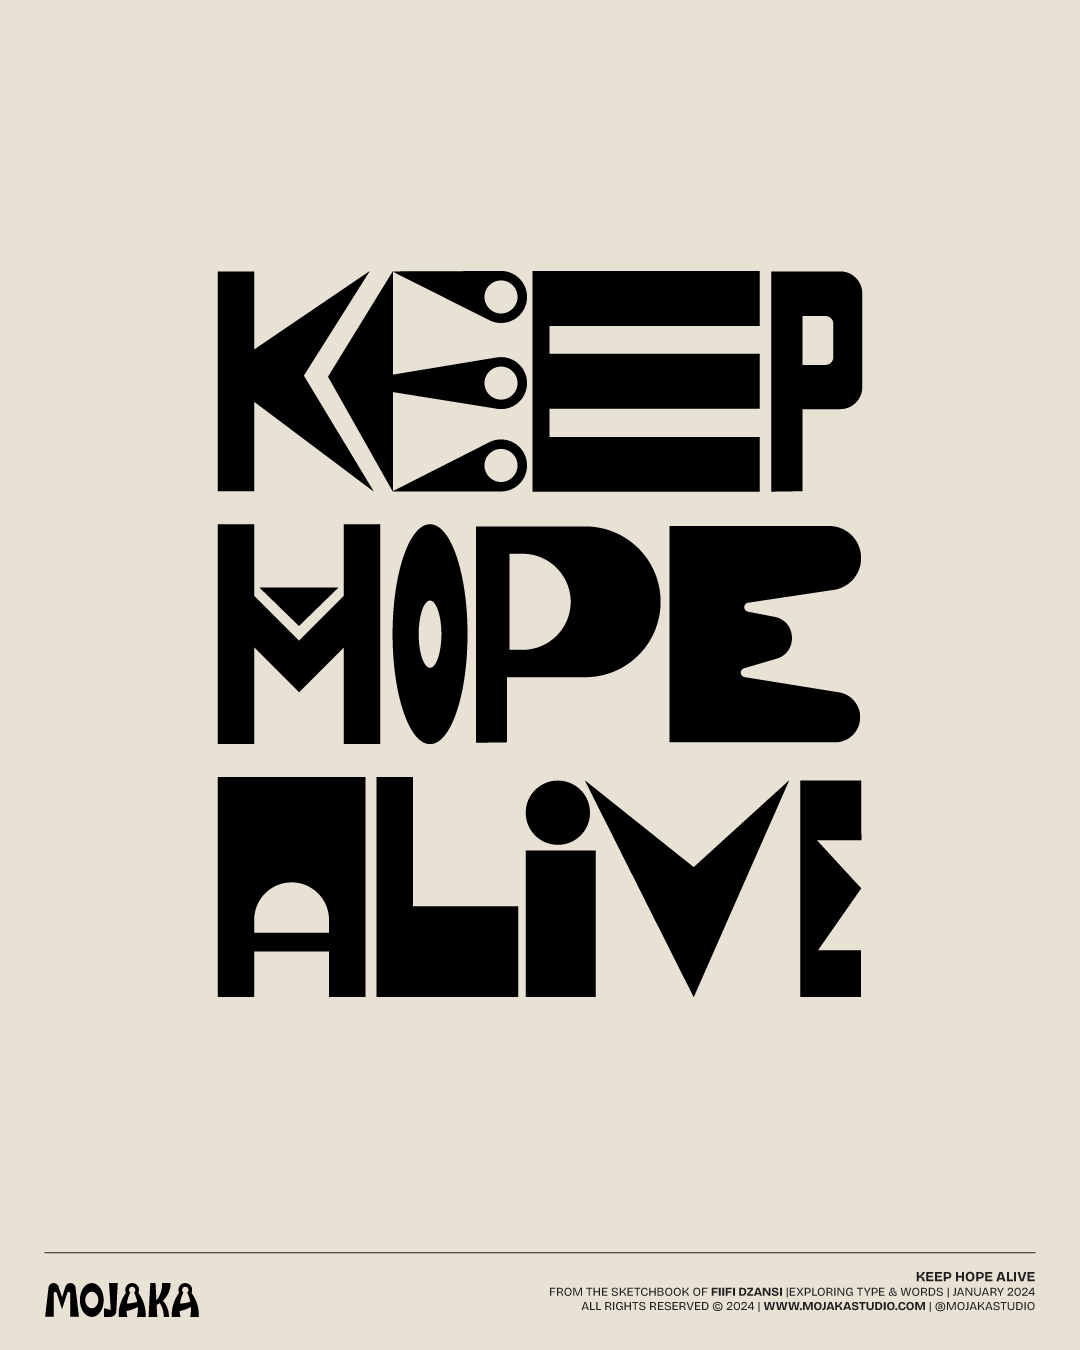 Keep hope alive type design in black.